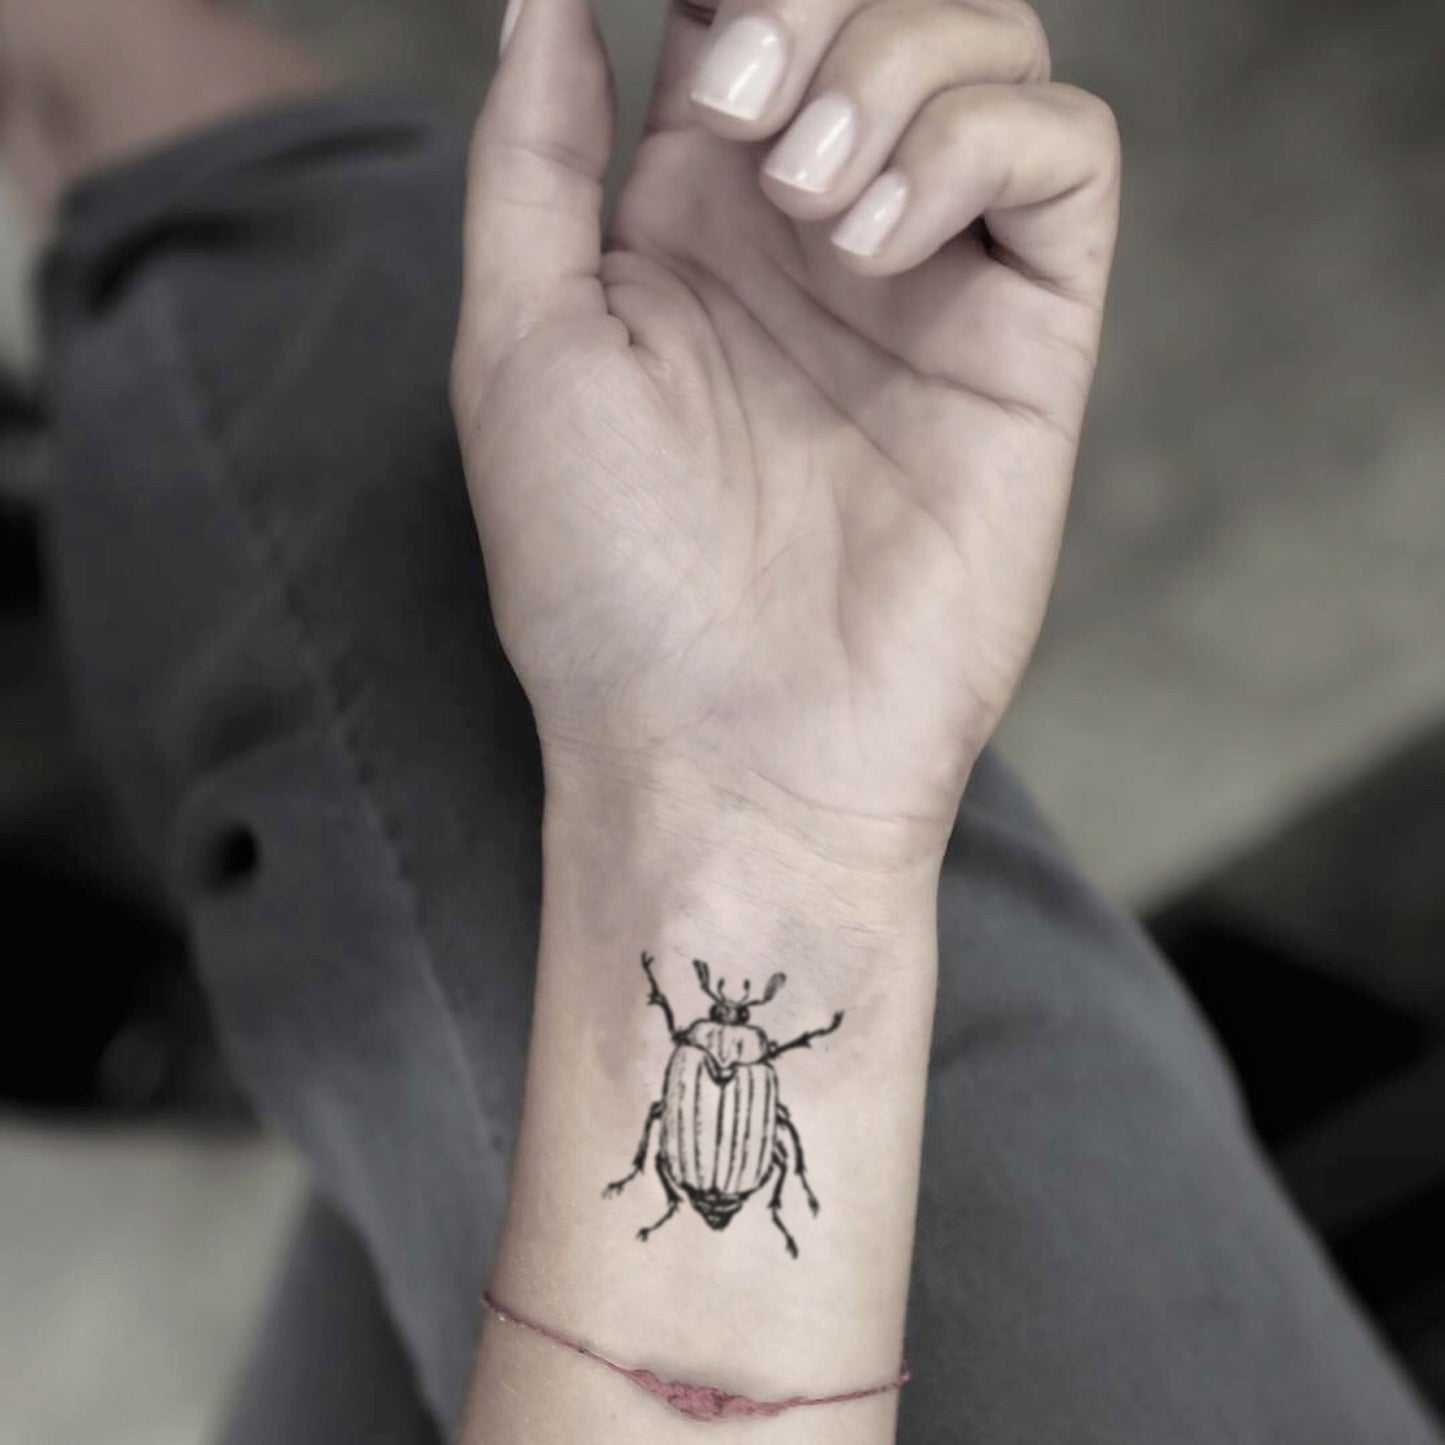 fake small june bug animal temporary tattoo sticker design idea on wrist